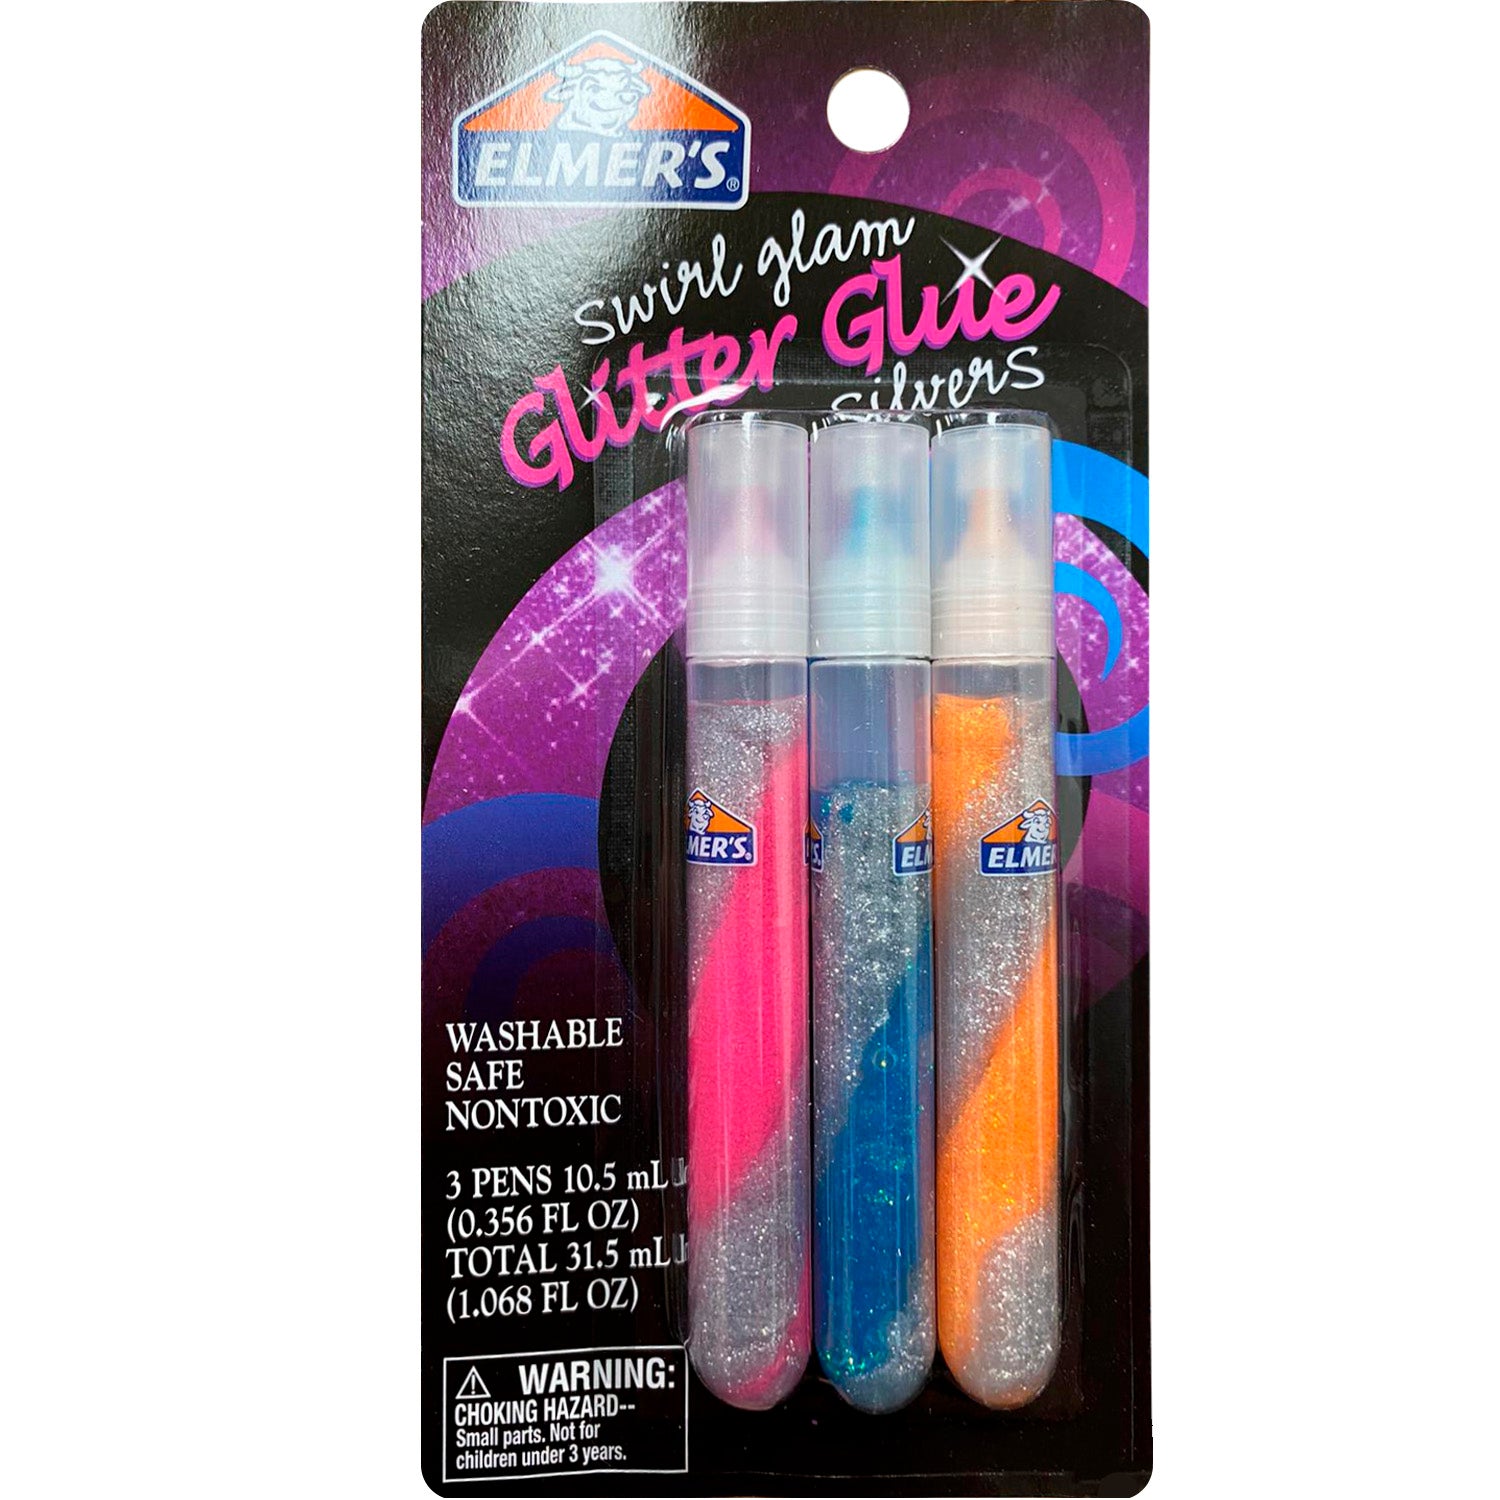 Art Glitter Glue 2pk. Replacement Top